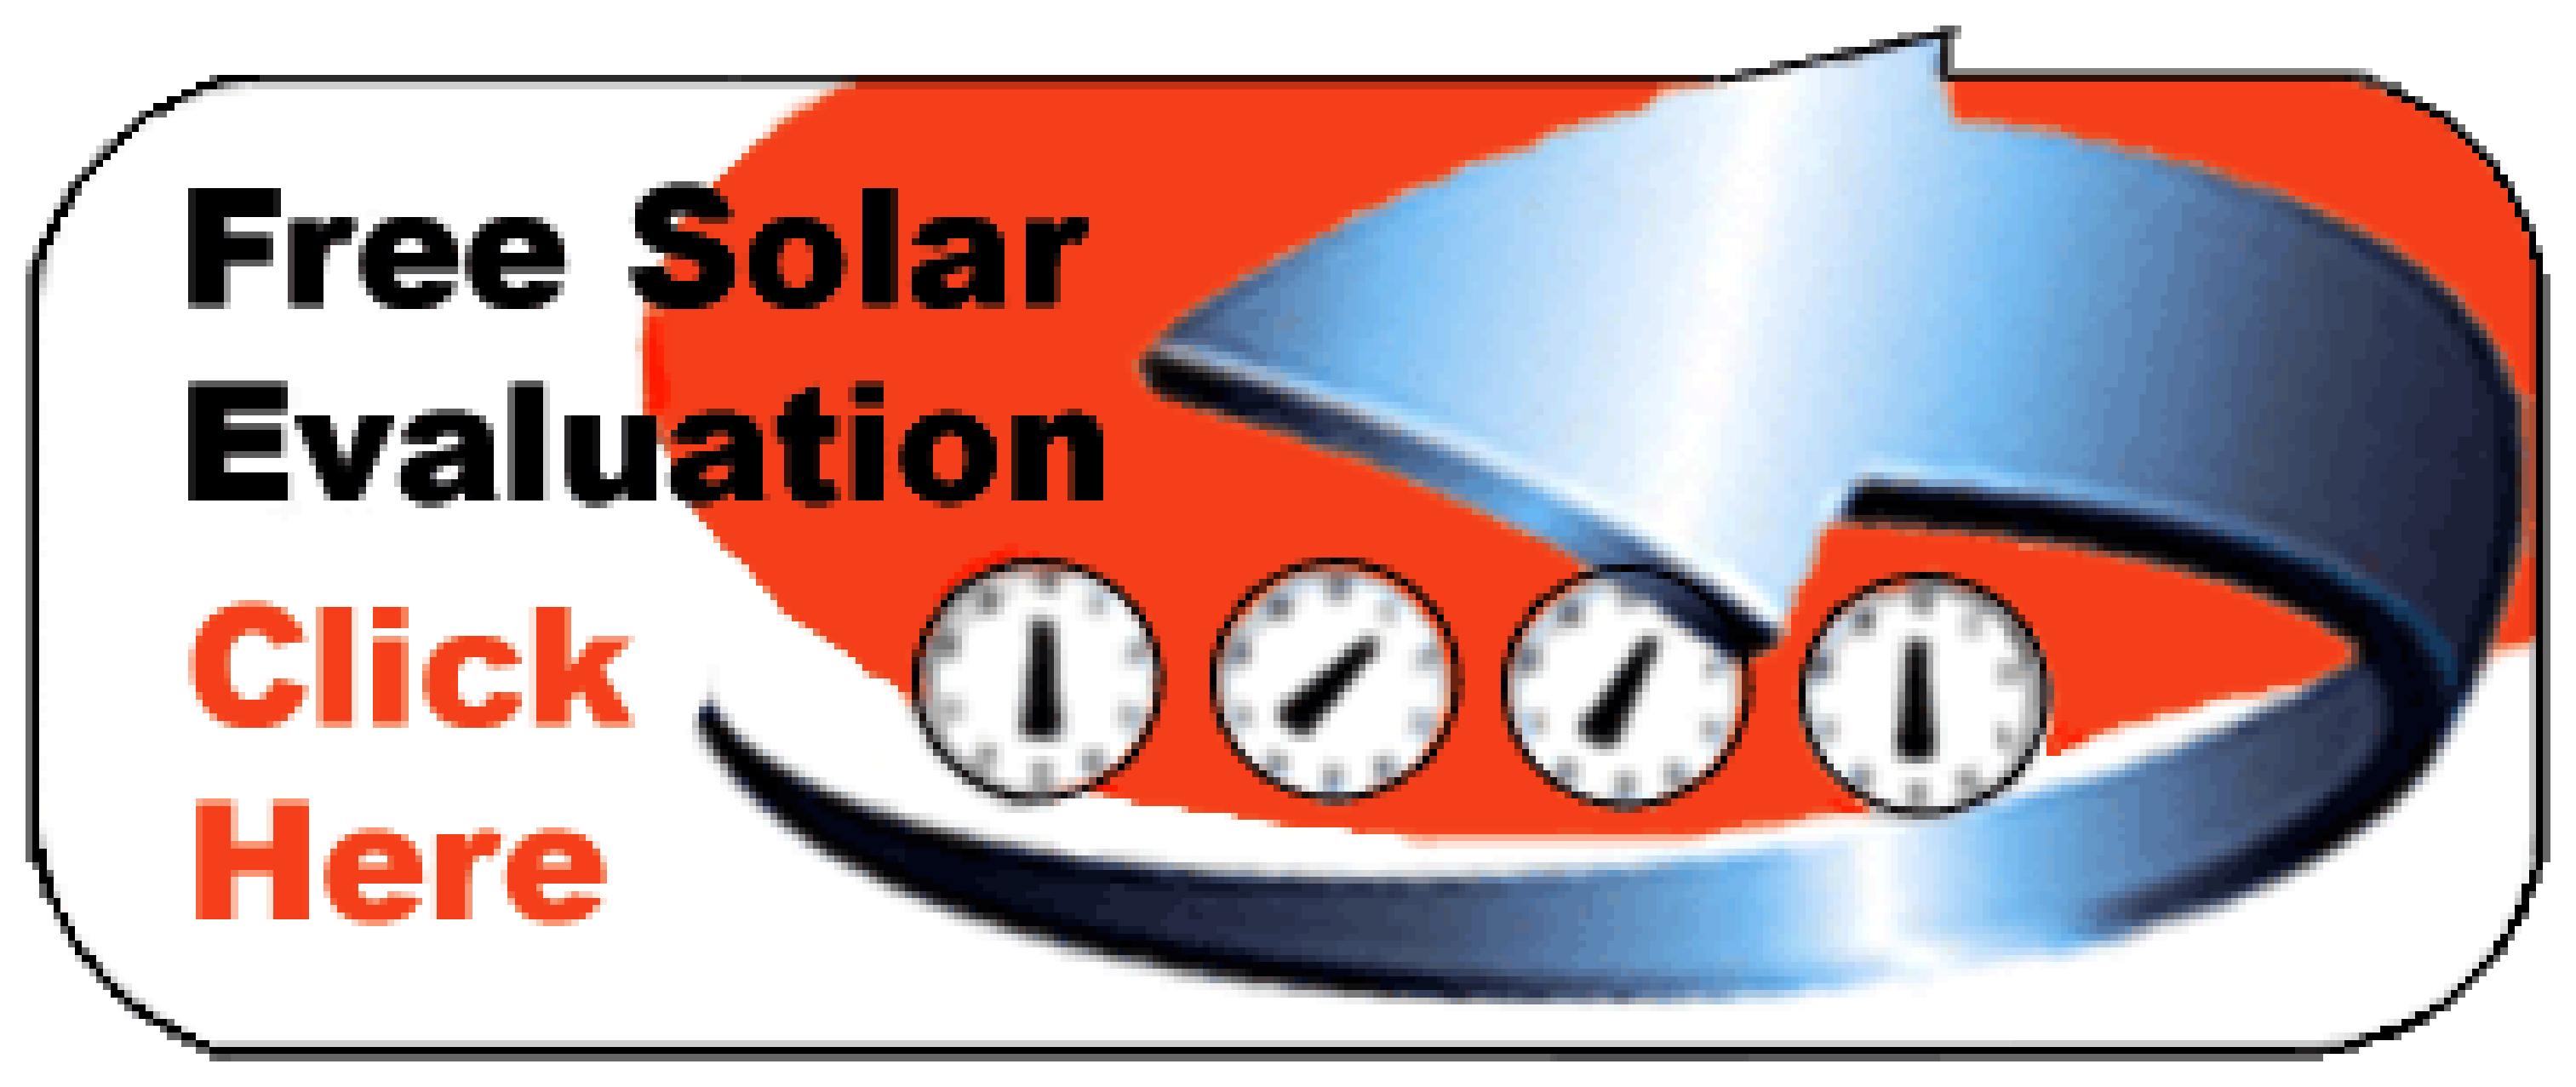 Free Solar Evaluation